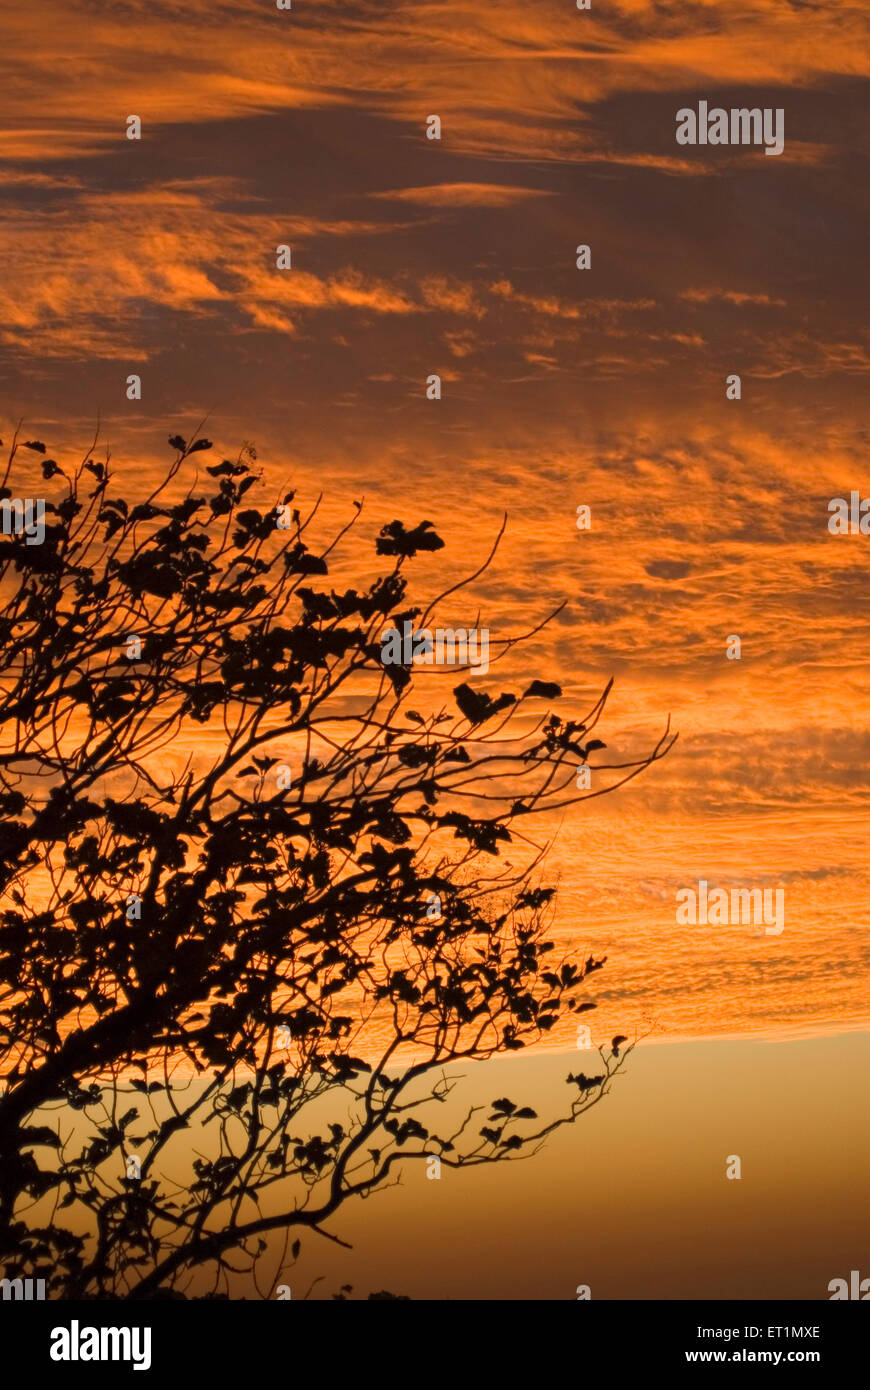 tree silhouette orange sky yellow clouds sunrise dawn morning Stock Photo